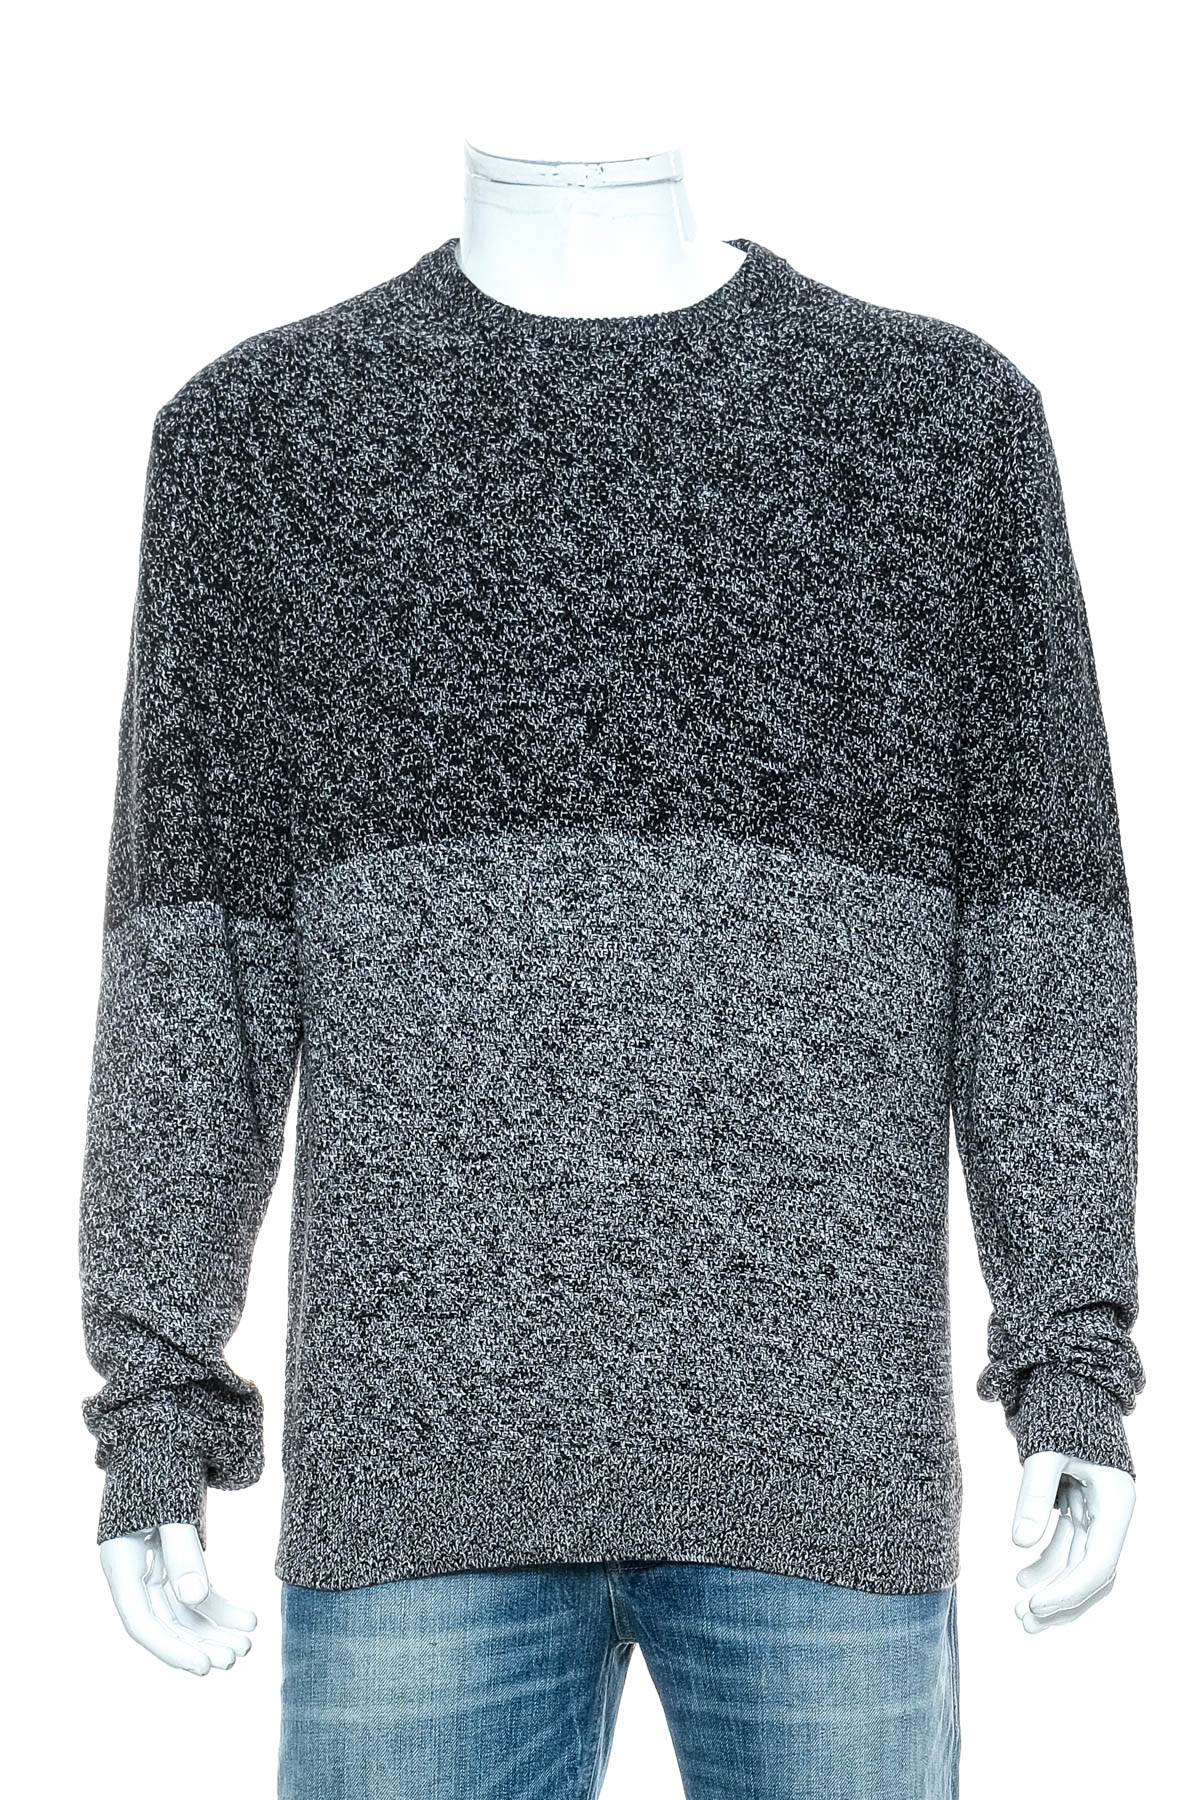 Men's sweater - Target - 0